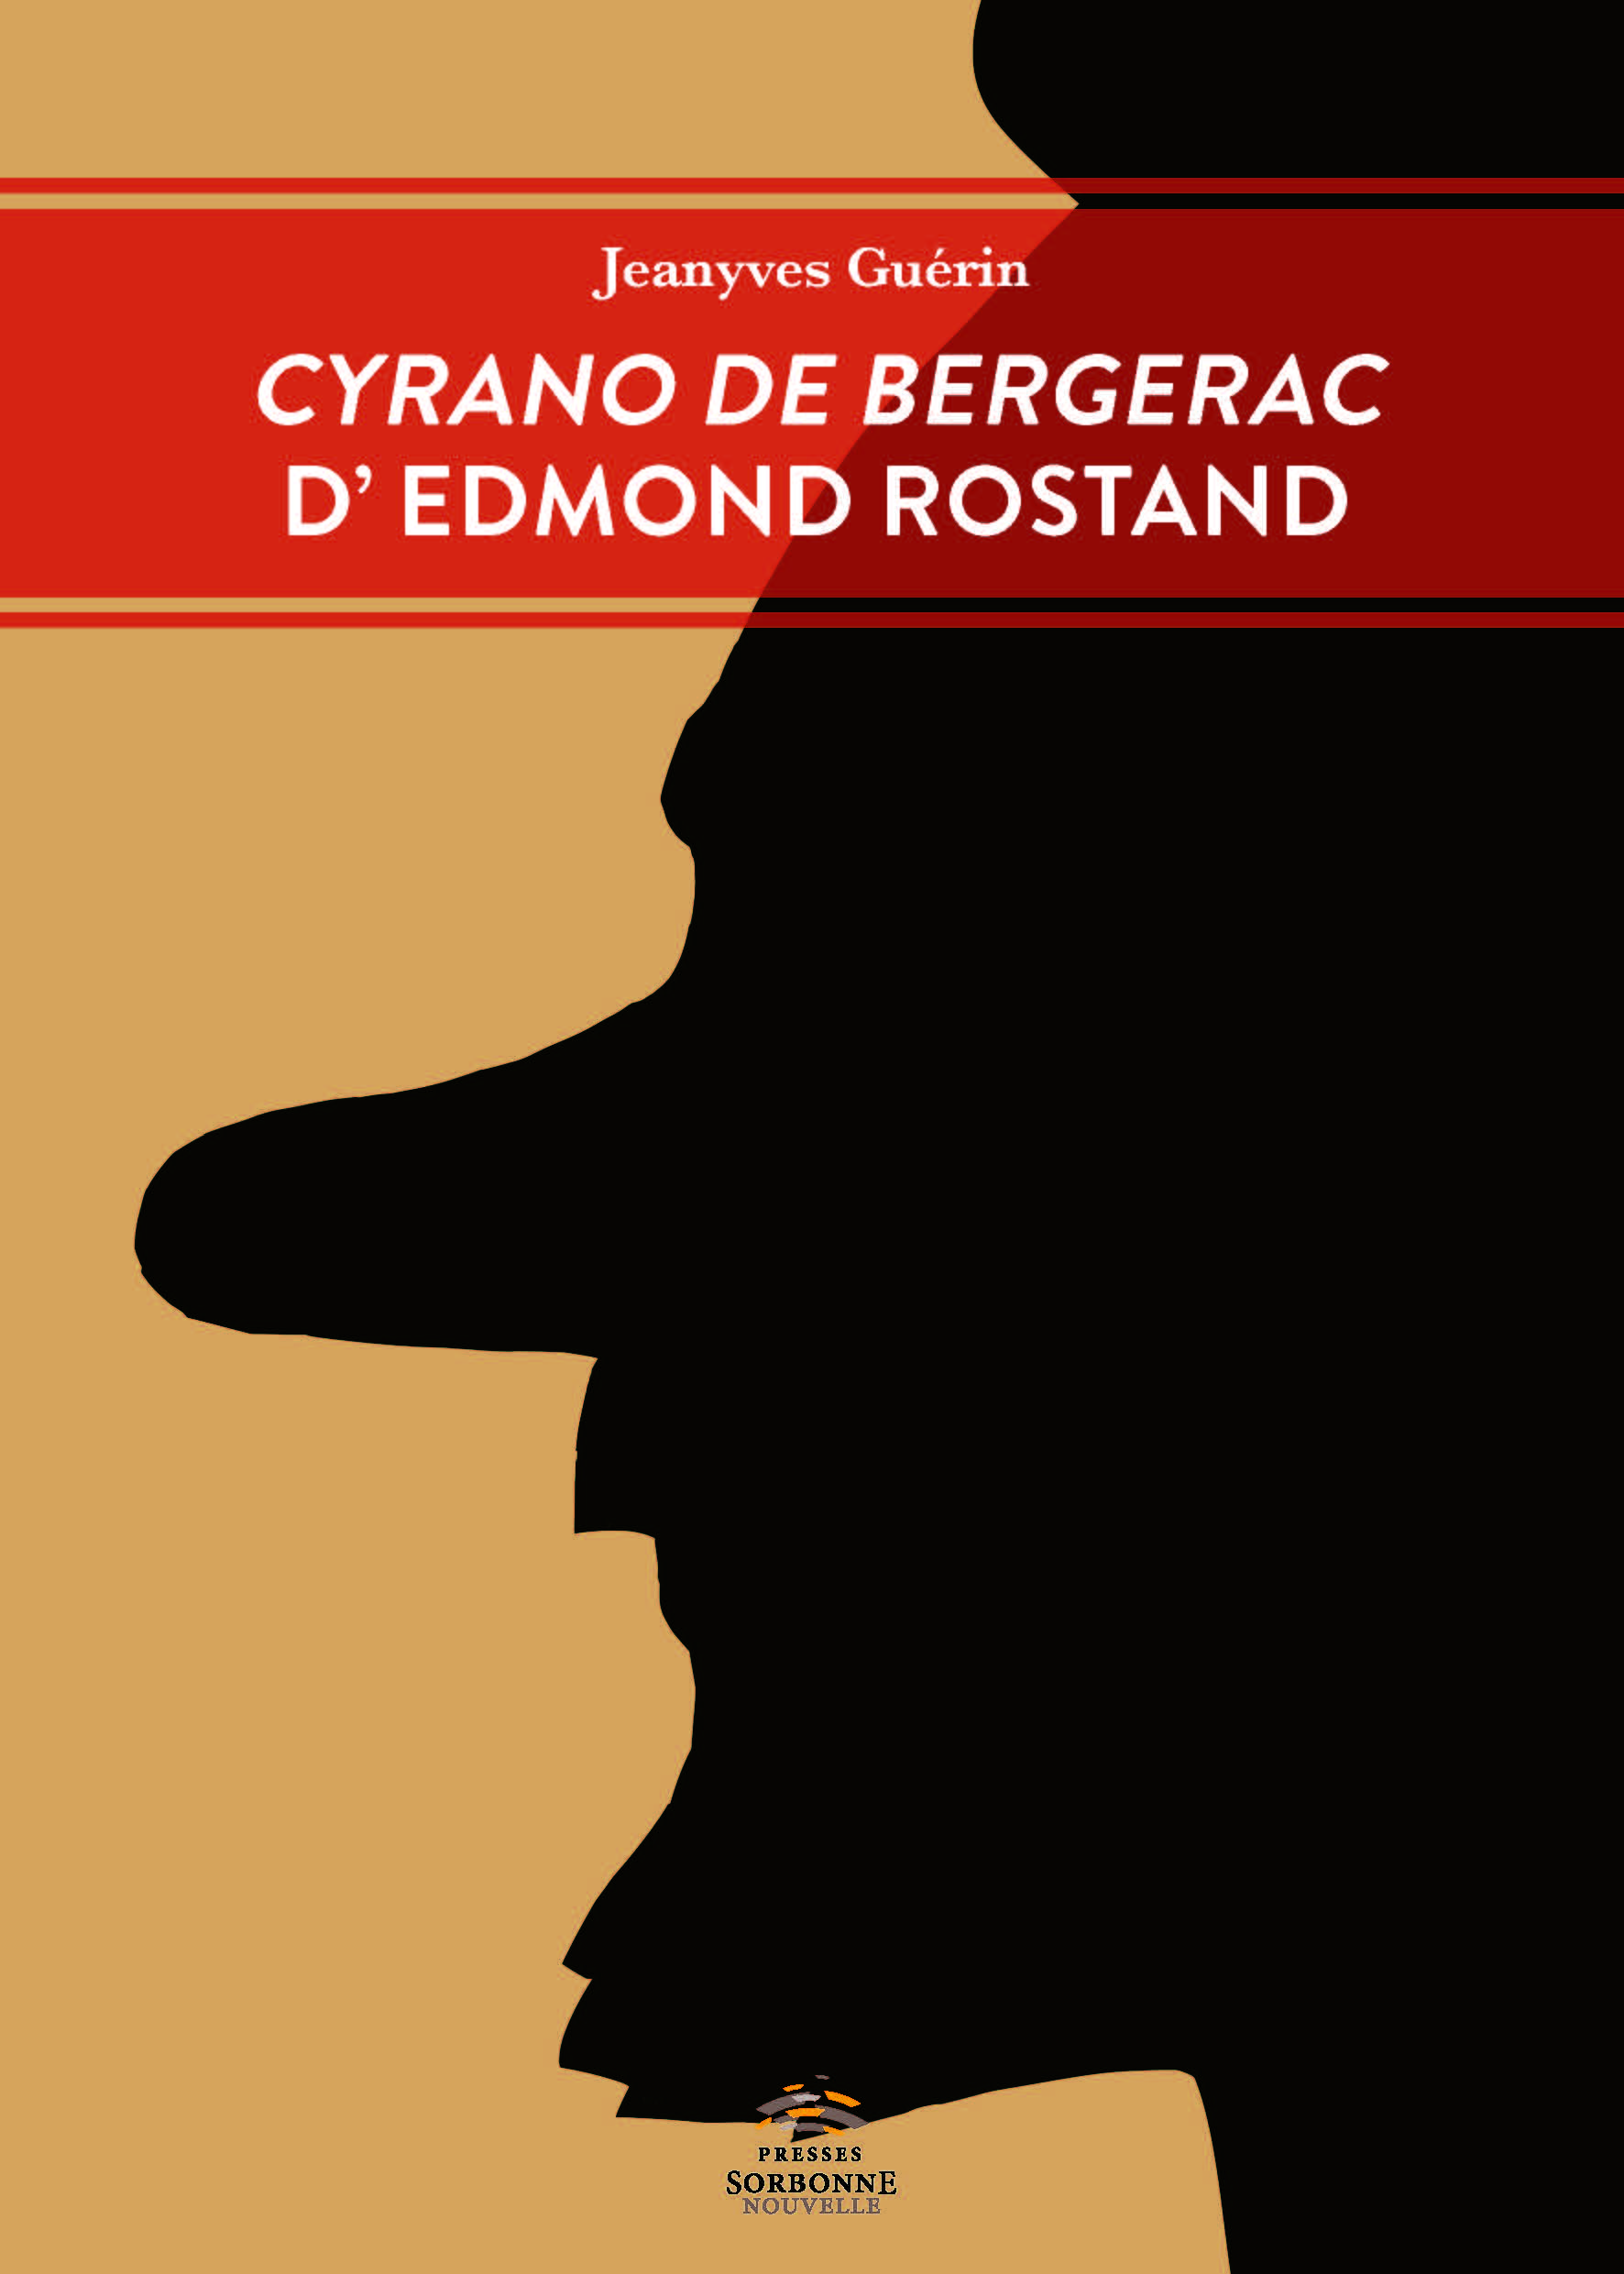 Jeanyves Guérin, Cyrano de Bergerac d’Edmond Rostand